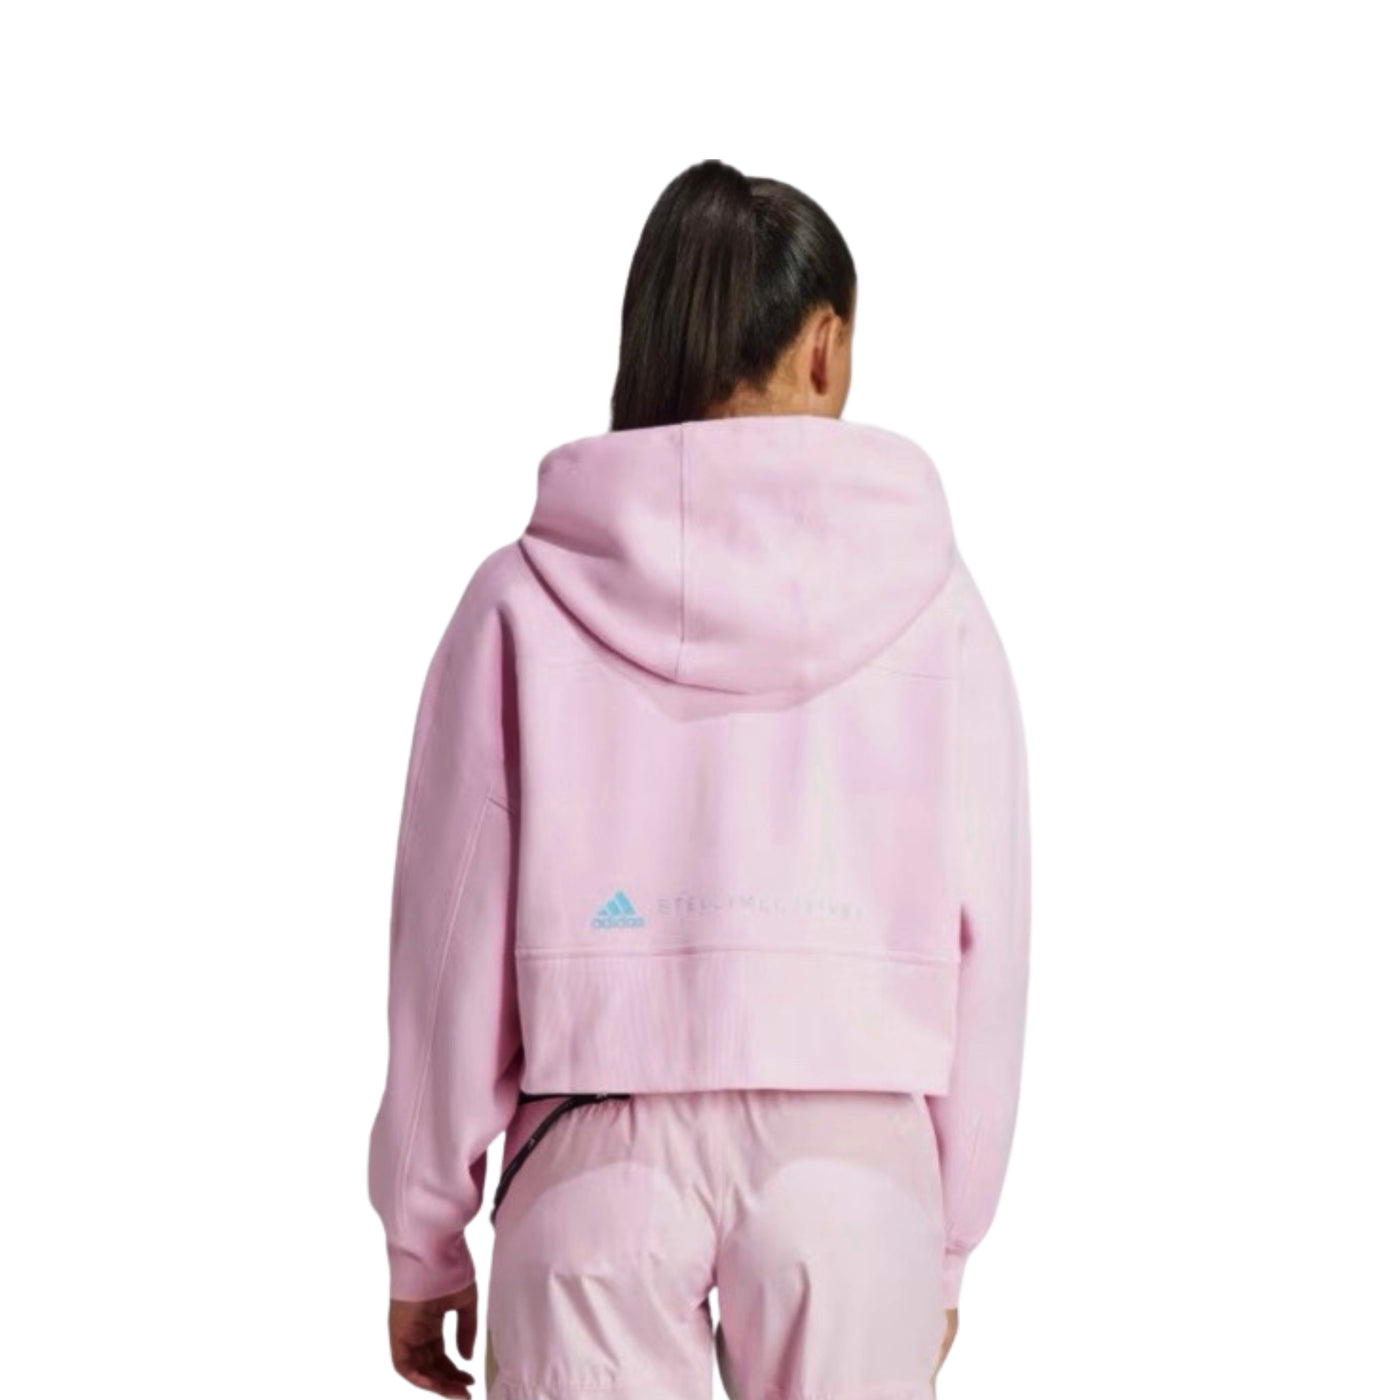 Adidas by Stella McCartney cropped hoodie